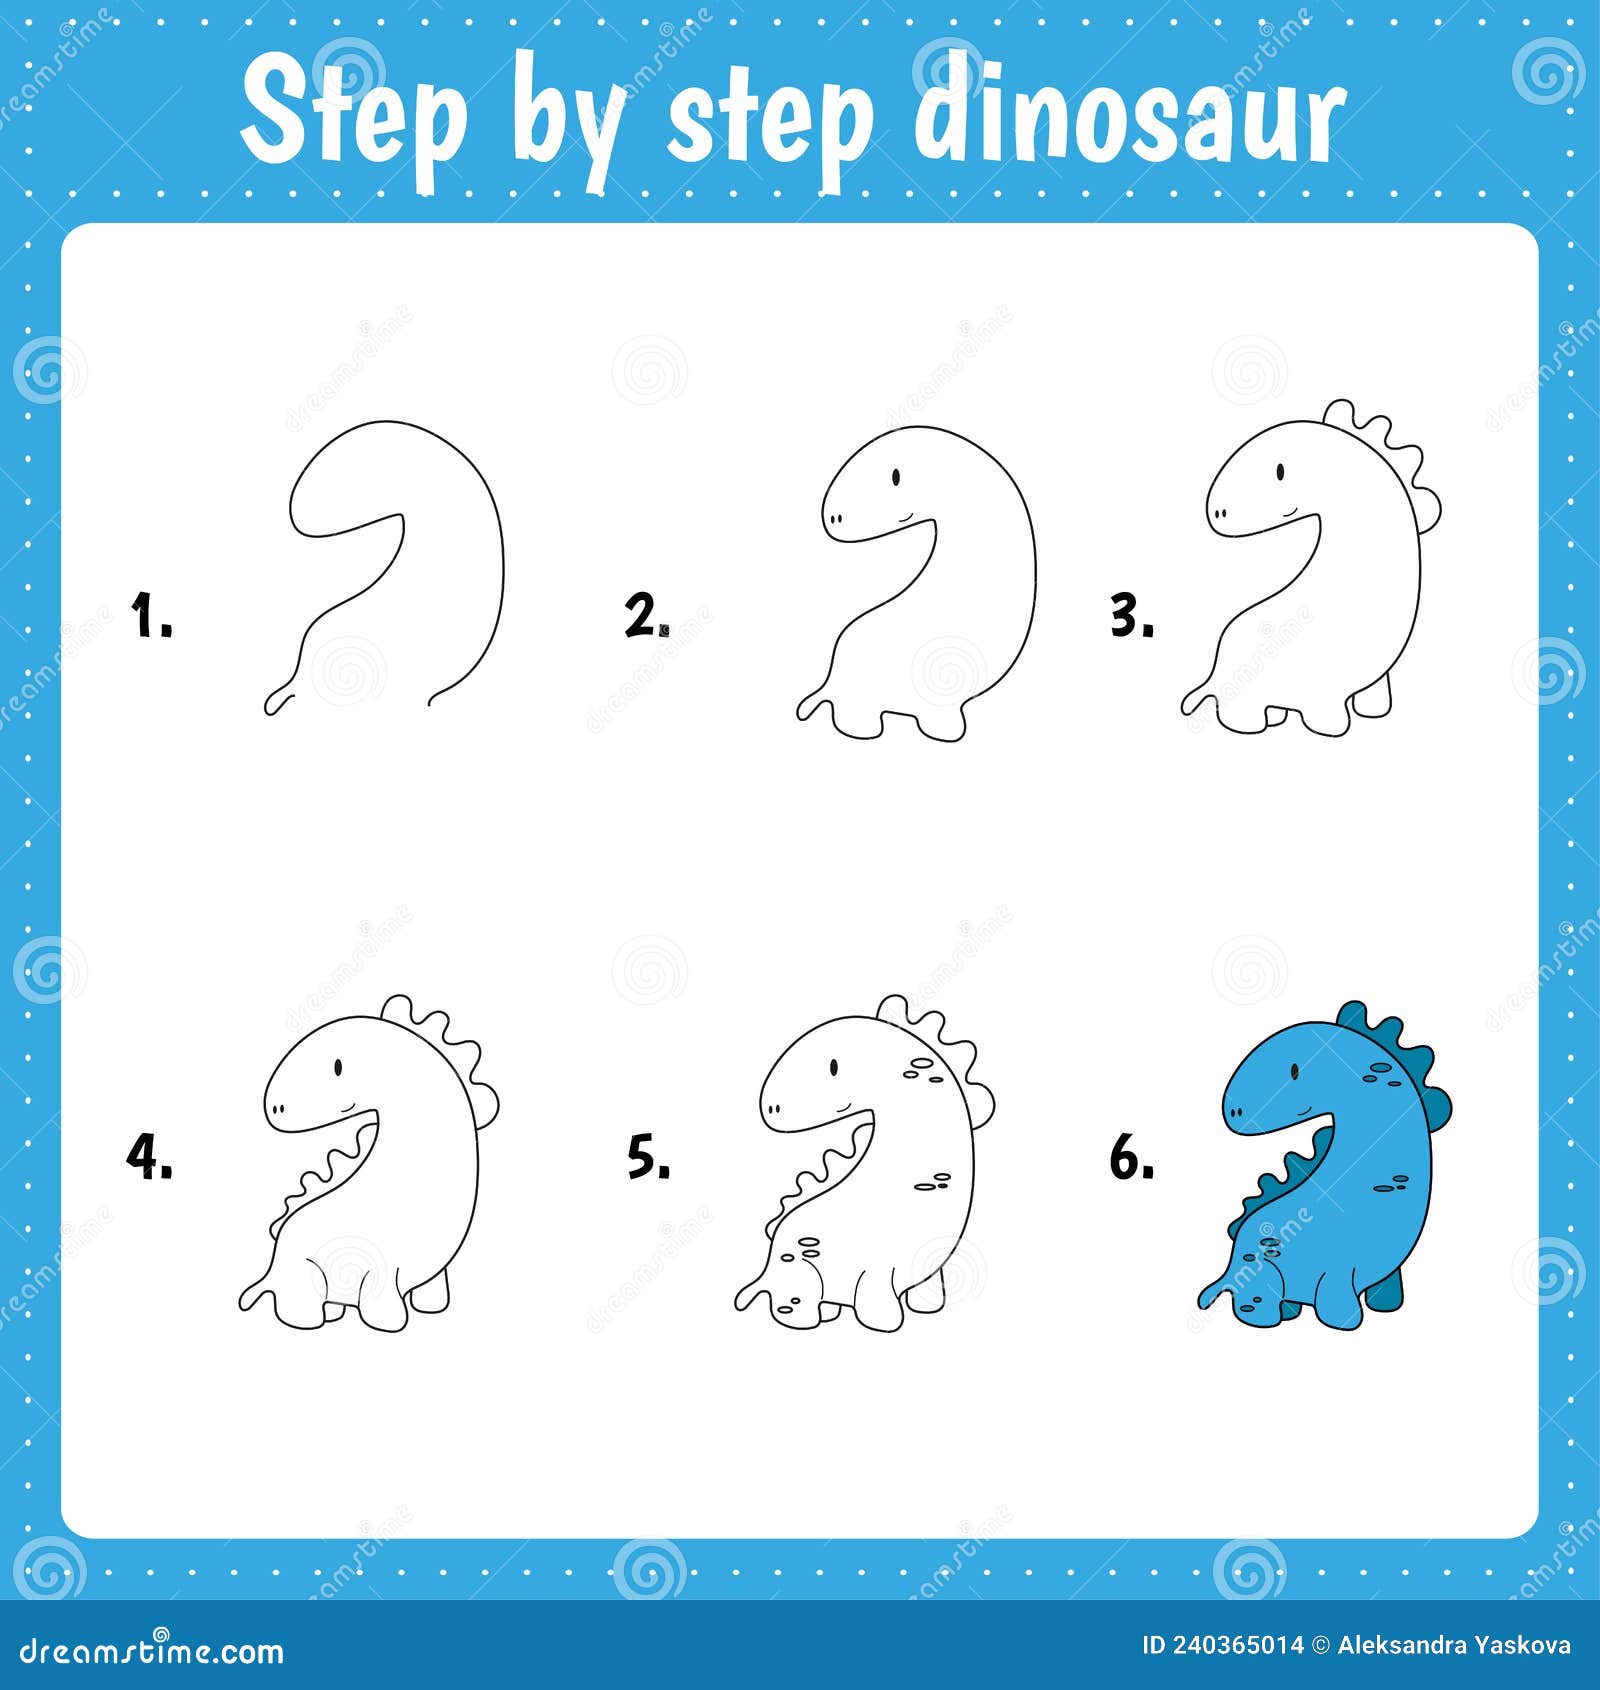 stegosaurus drawing for kids - Clip Art Library